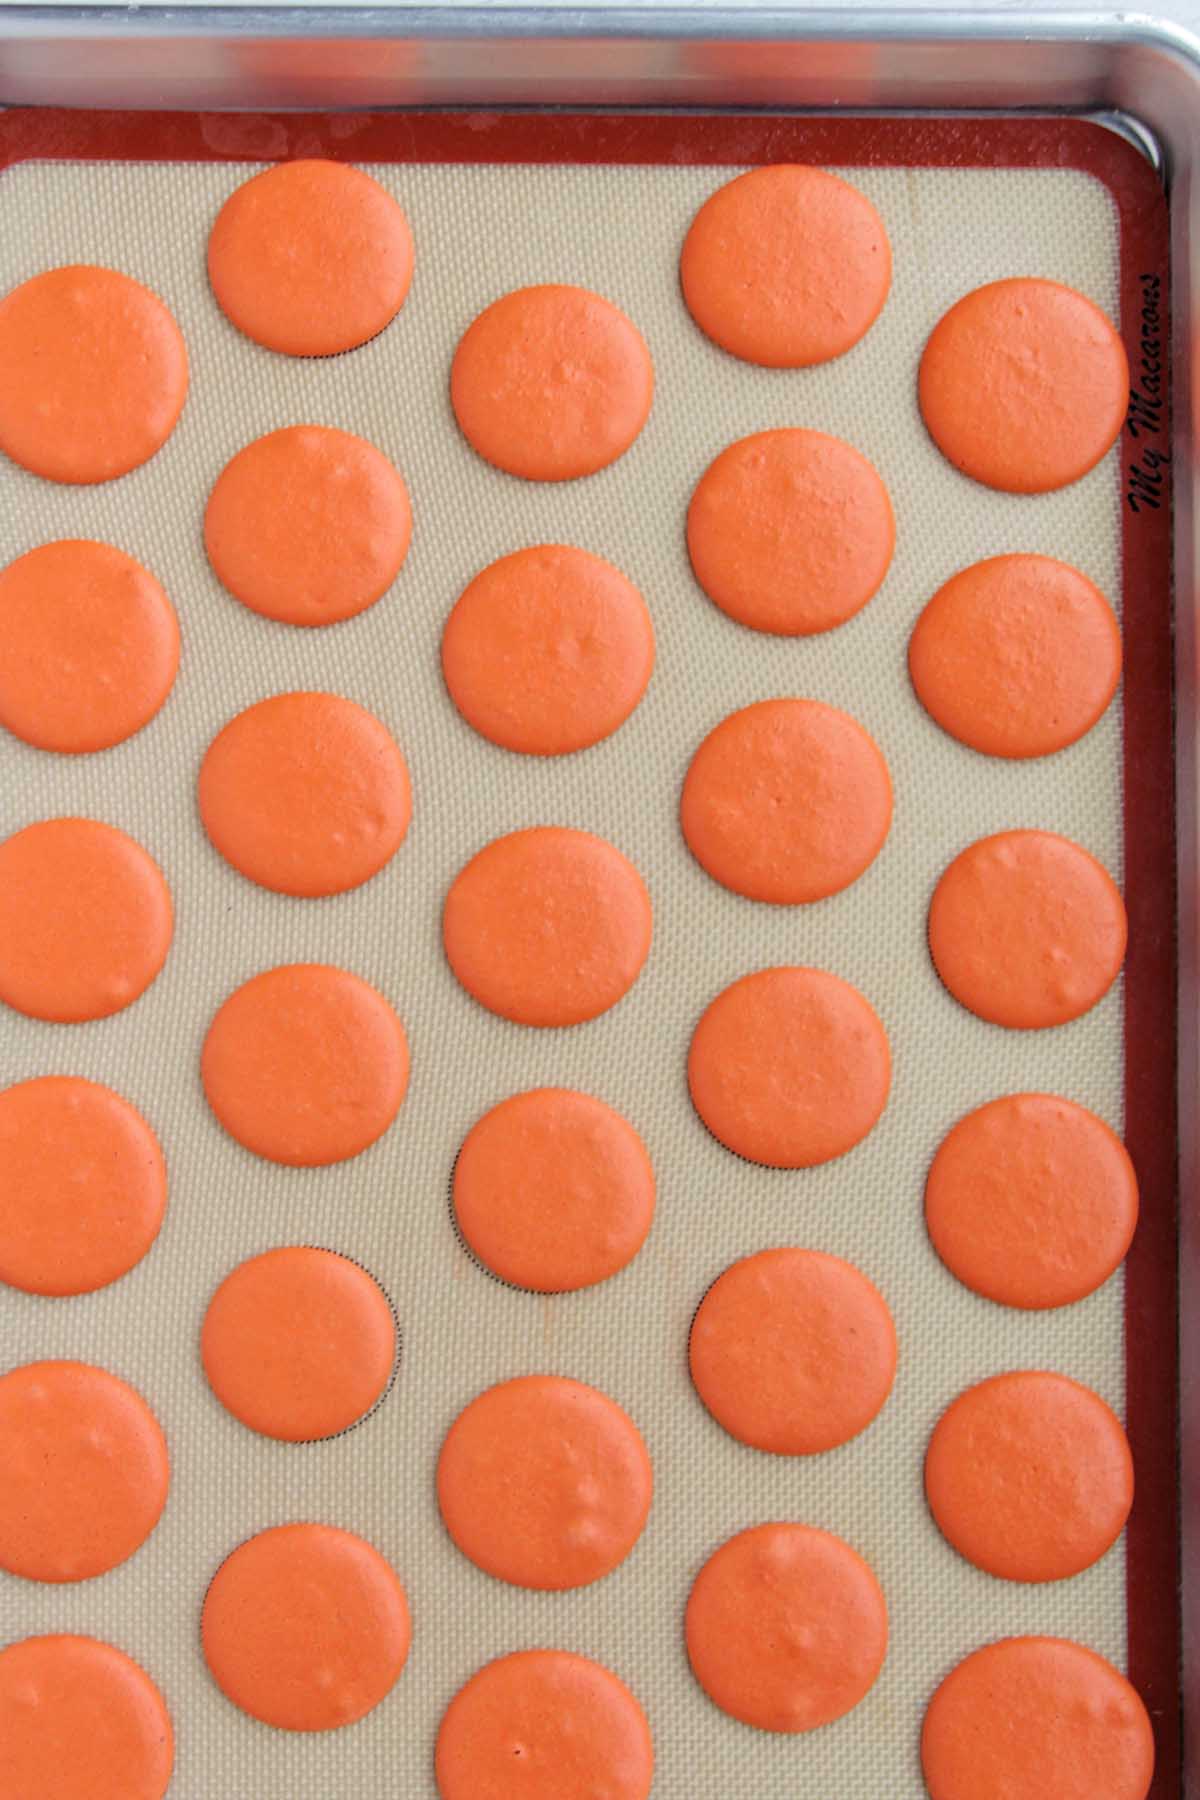 dried macaron shells on a sheet tray.